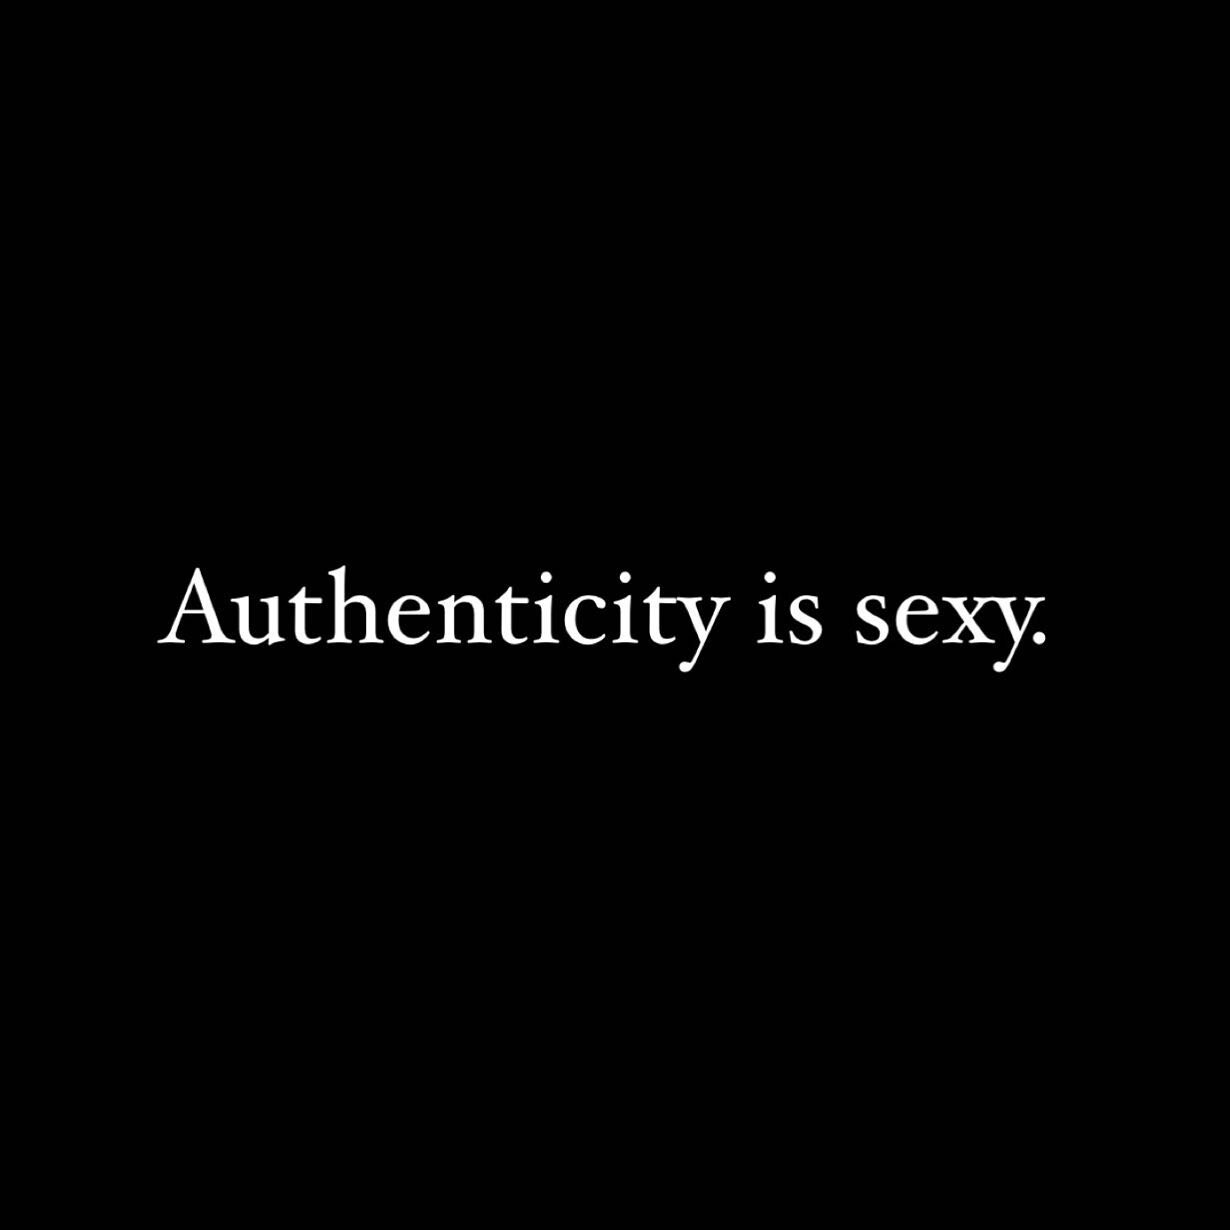 Being comfortable in your own skin is the biggest flex. 

#mastery #self #love #authenticity #empoweryourself #knowyourworth #stacheweho #gaybar #restaurant #nightclub #gaynightlife #gayrights